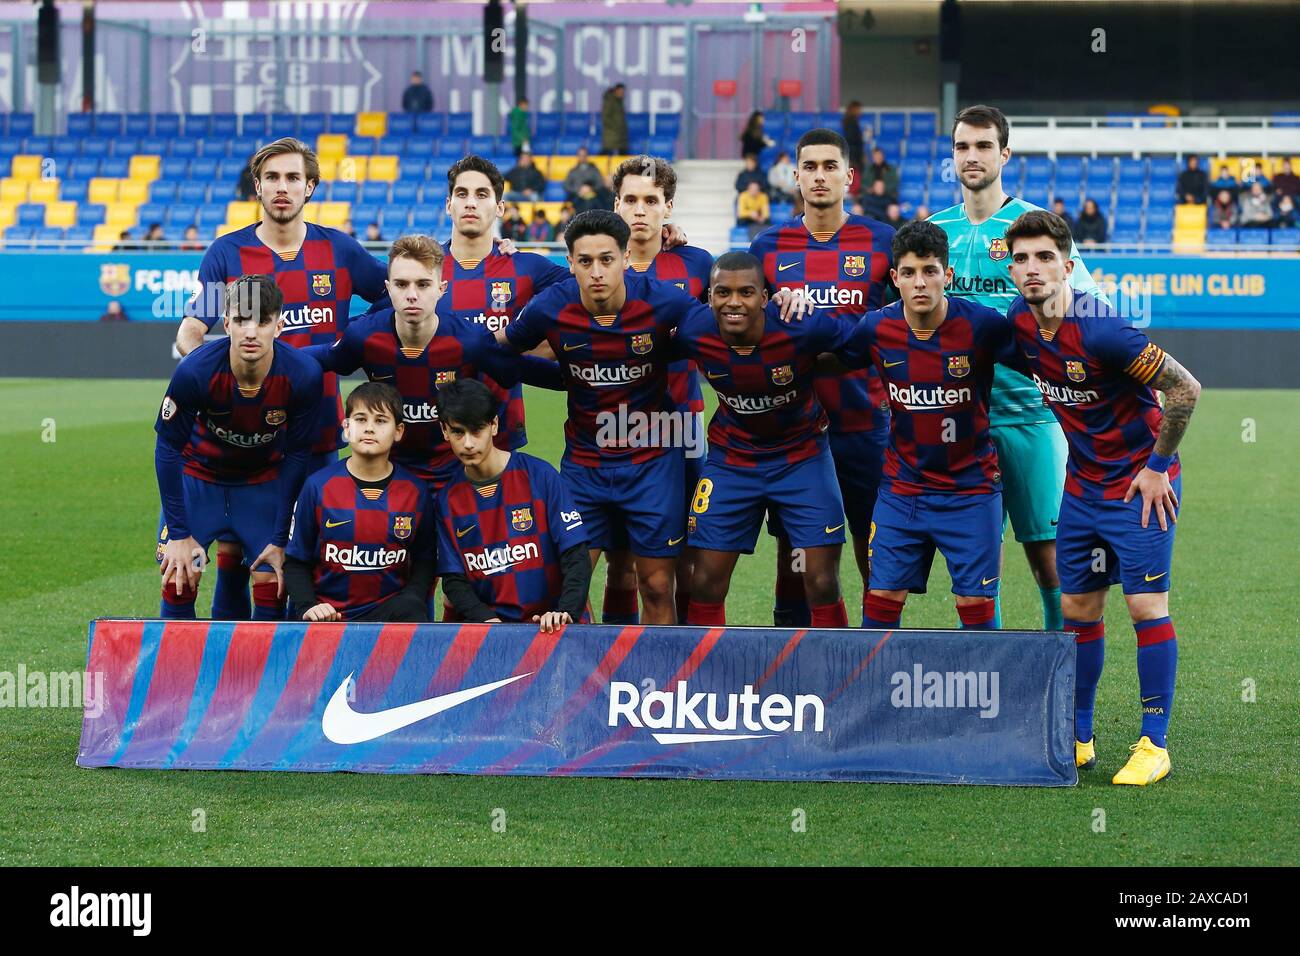 Mannschaftsgruppe Barcelona B (Barcelona B), 9. FEBRUAR 2020 - Fußball/ Fußball: Spanische Partie der Gruppe B der "La Liga Segunda Division B"  zwischen dem FC Barcelona B 2-3 Villarreal B im Estadi Johan